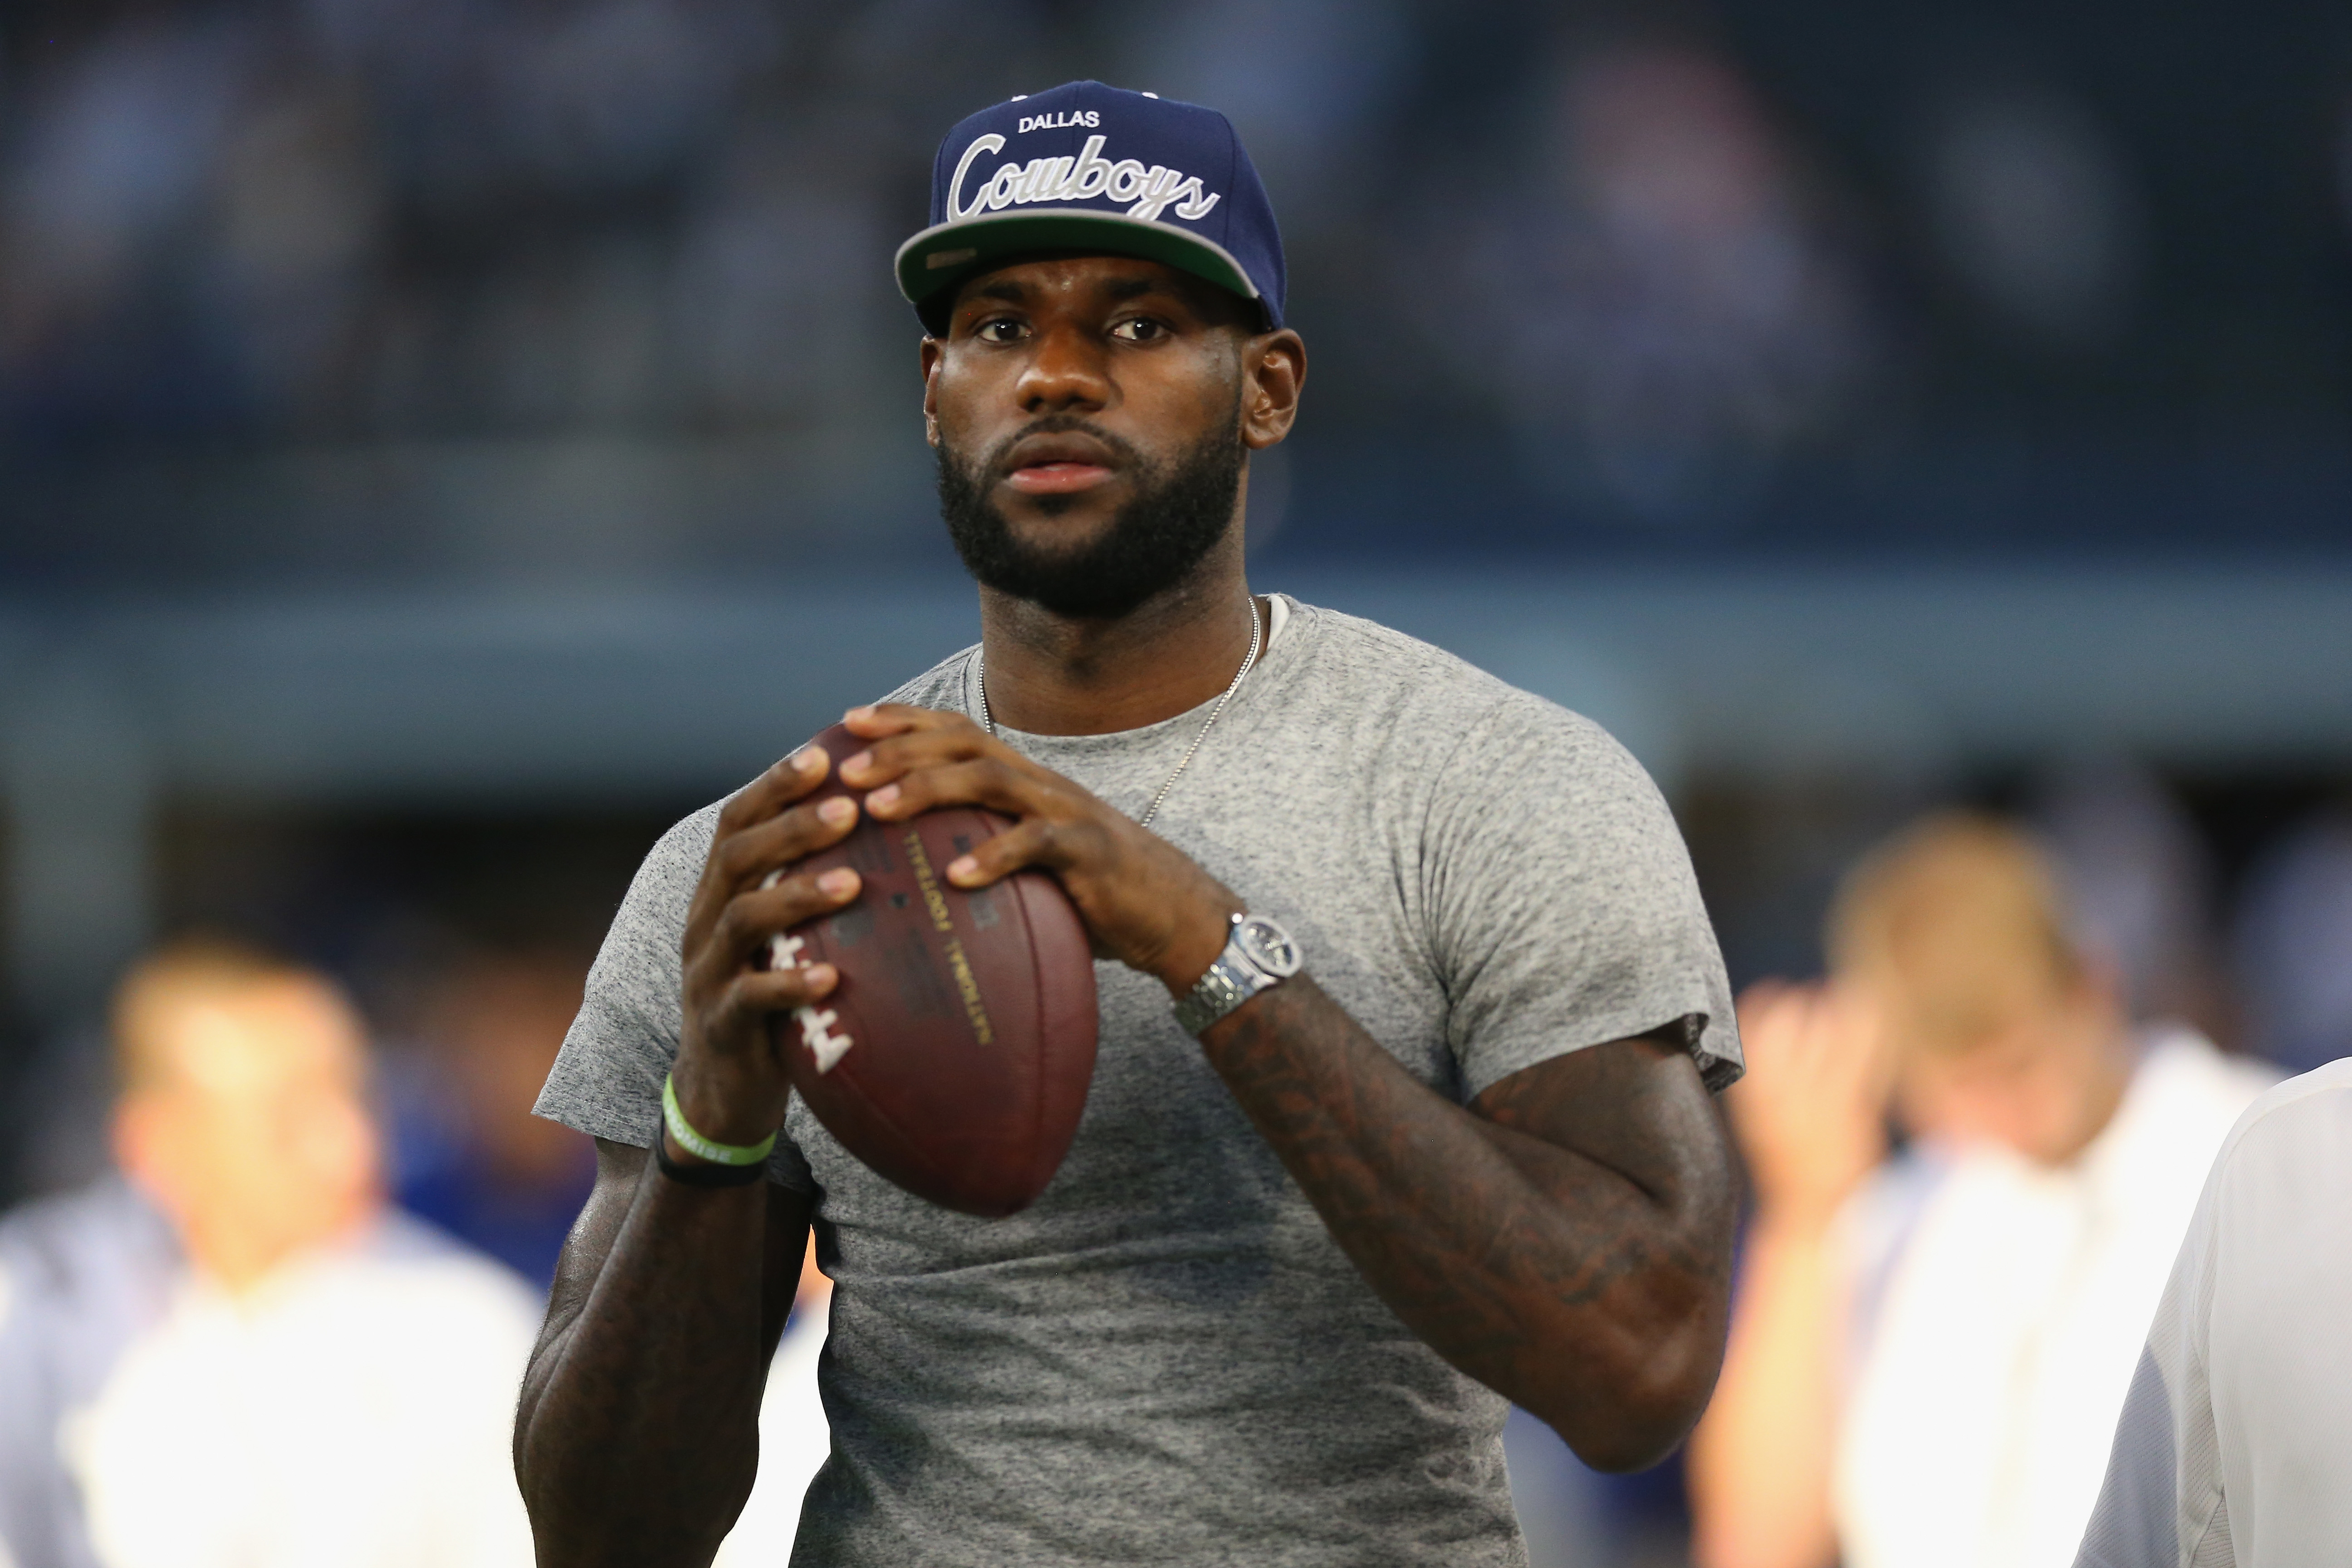 A man wearing a Dallas Cowboys cap prepares to throw an American football